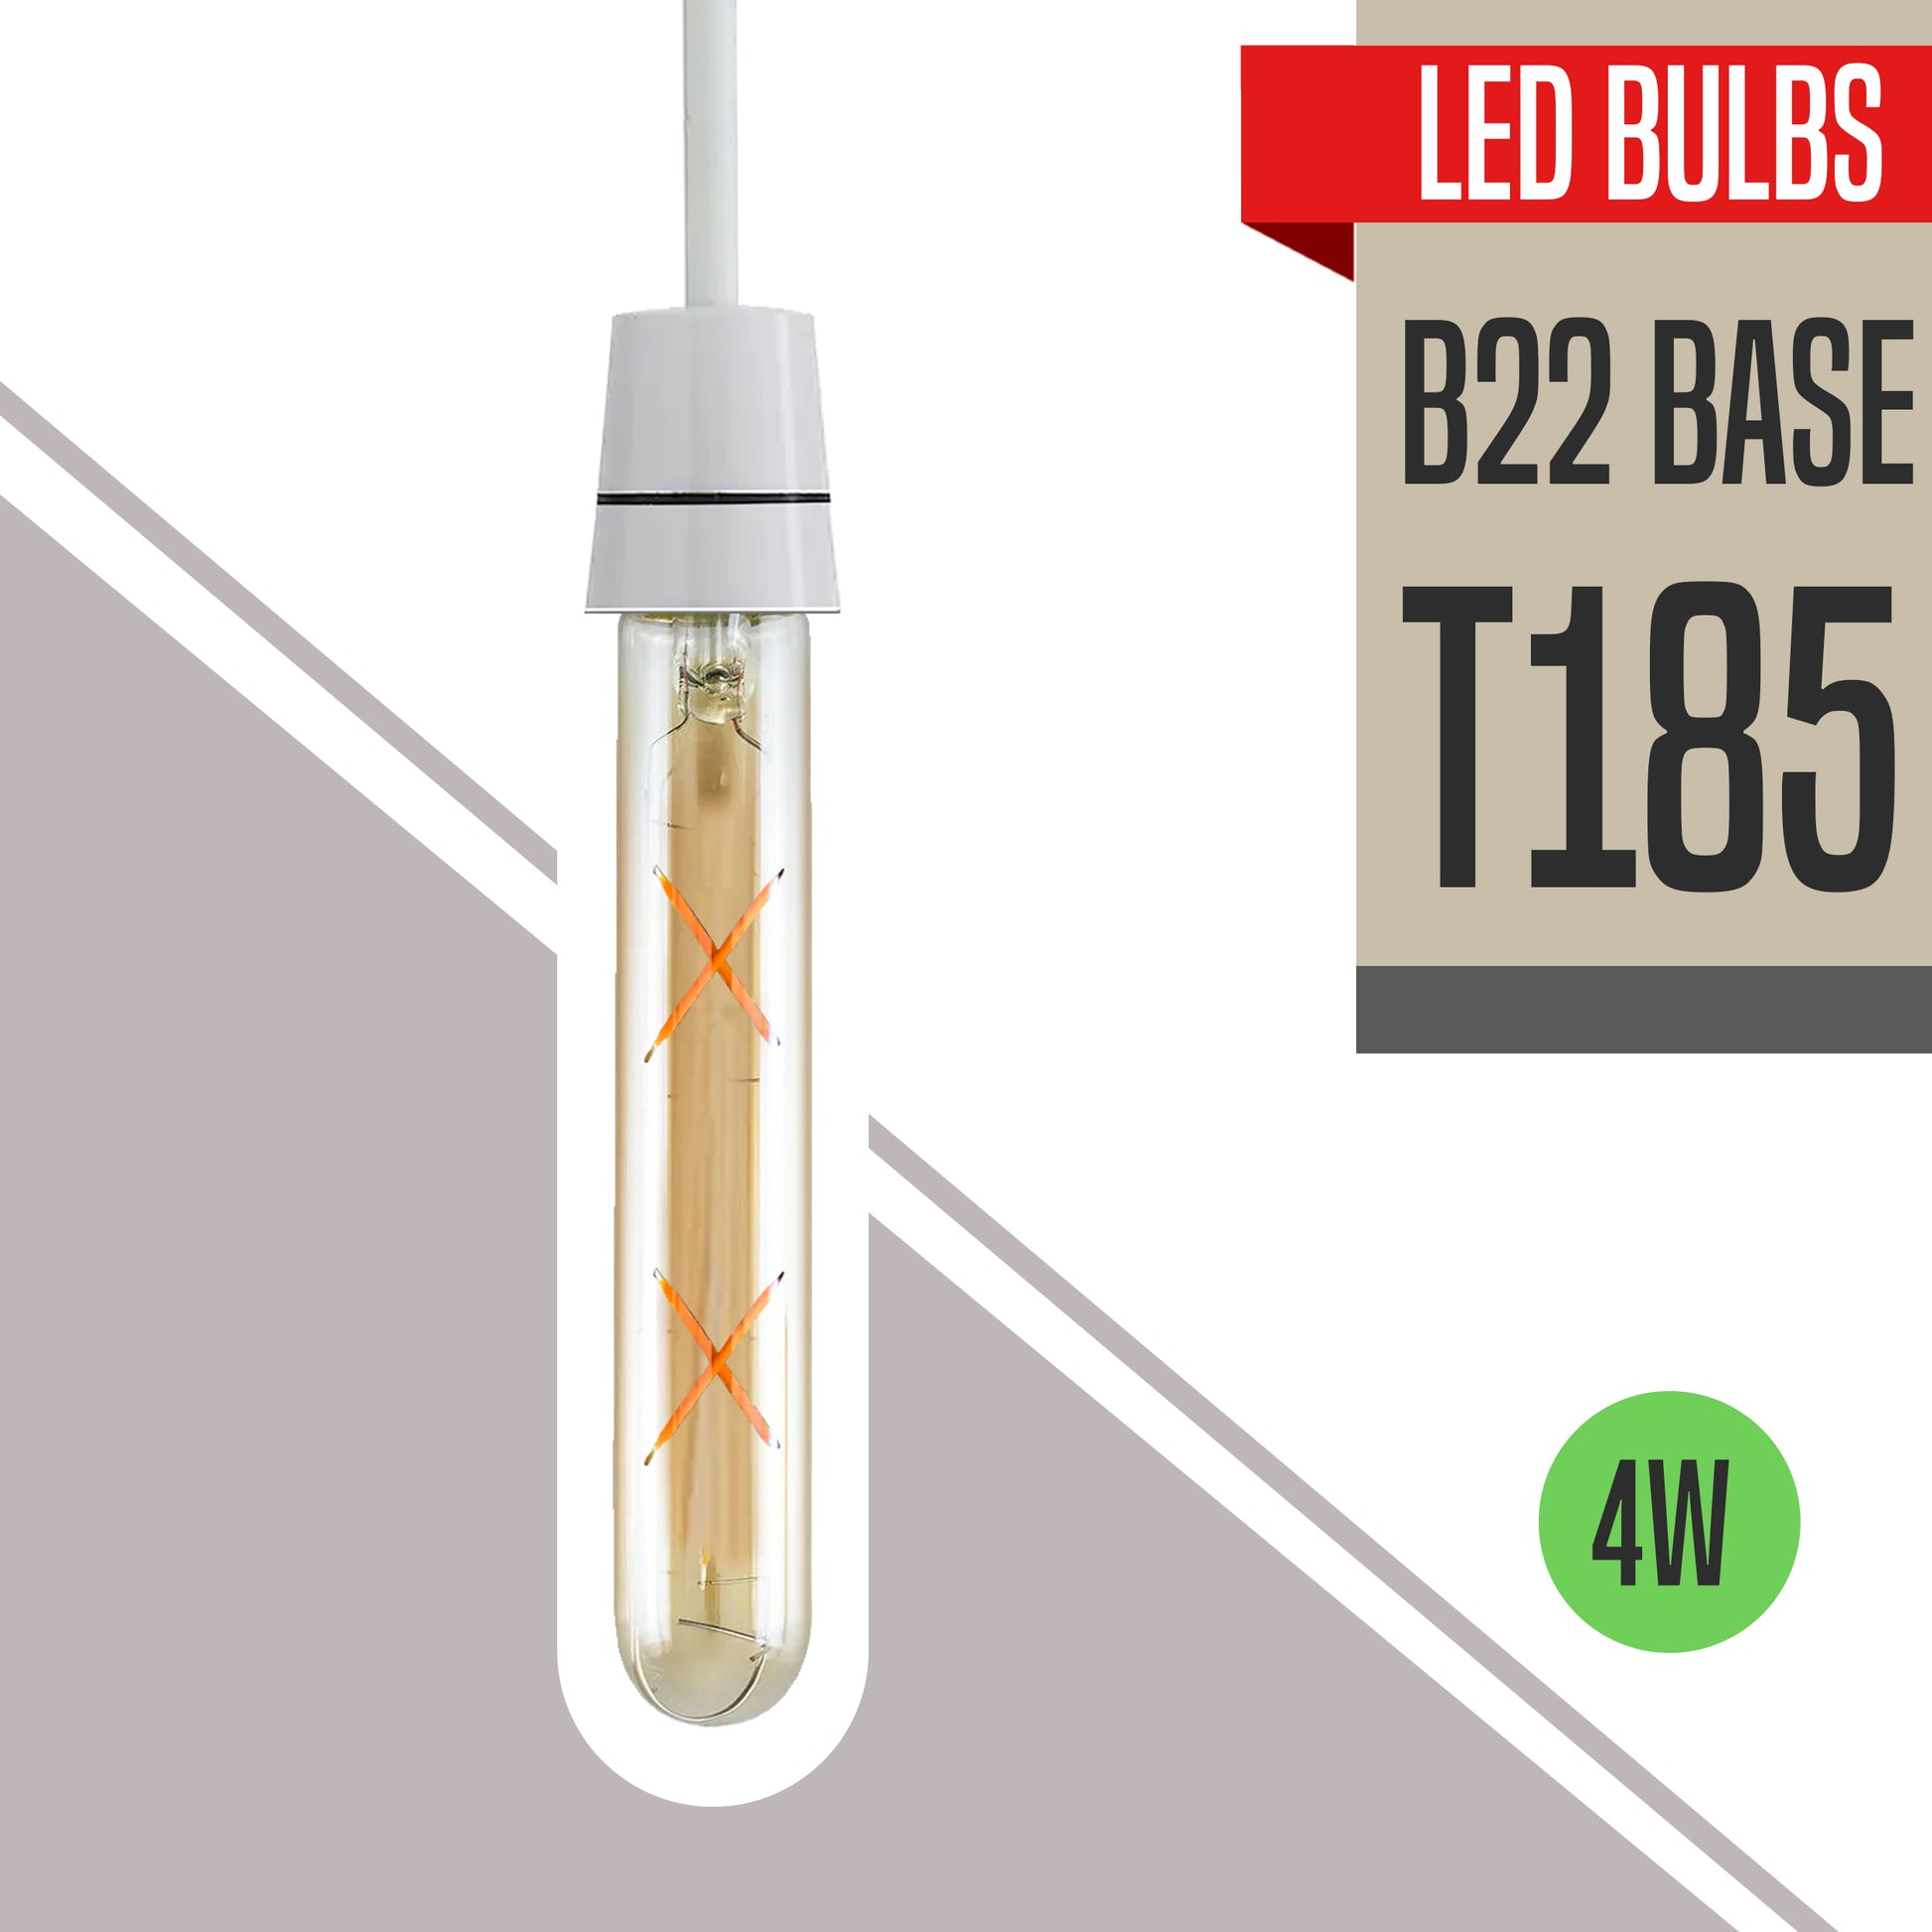 4W T185 B22 LED Non Dimmable Vintage Filament Light Bulb